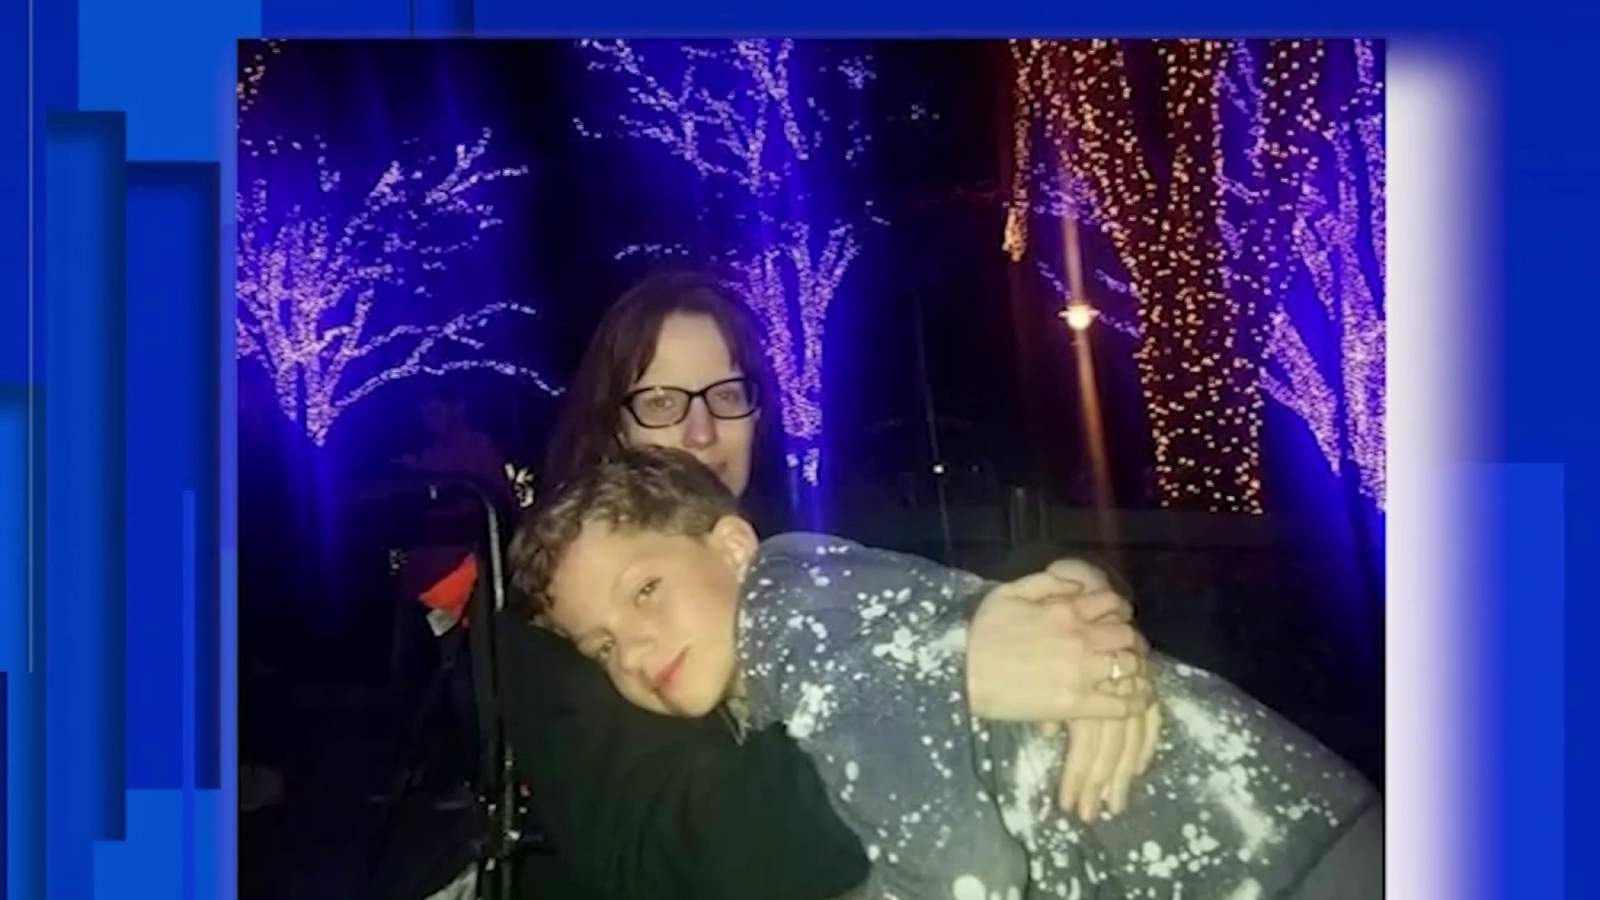 Altamonte Springs boy donates to Angel Tree program, Salvation Army surprises him